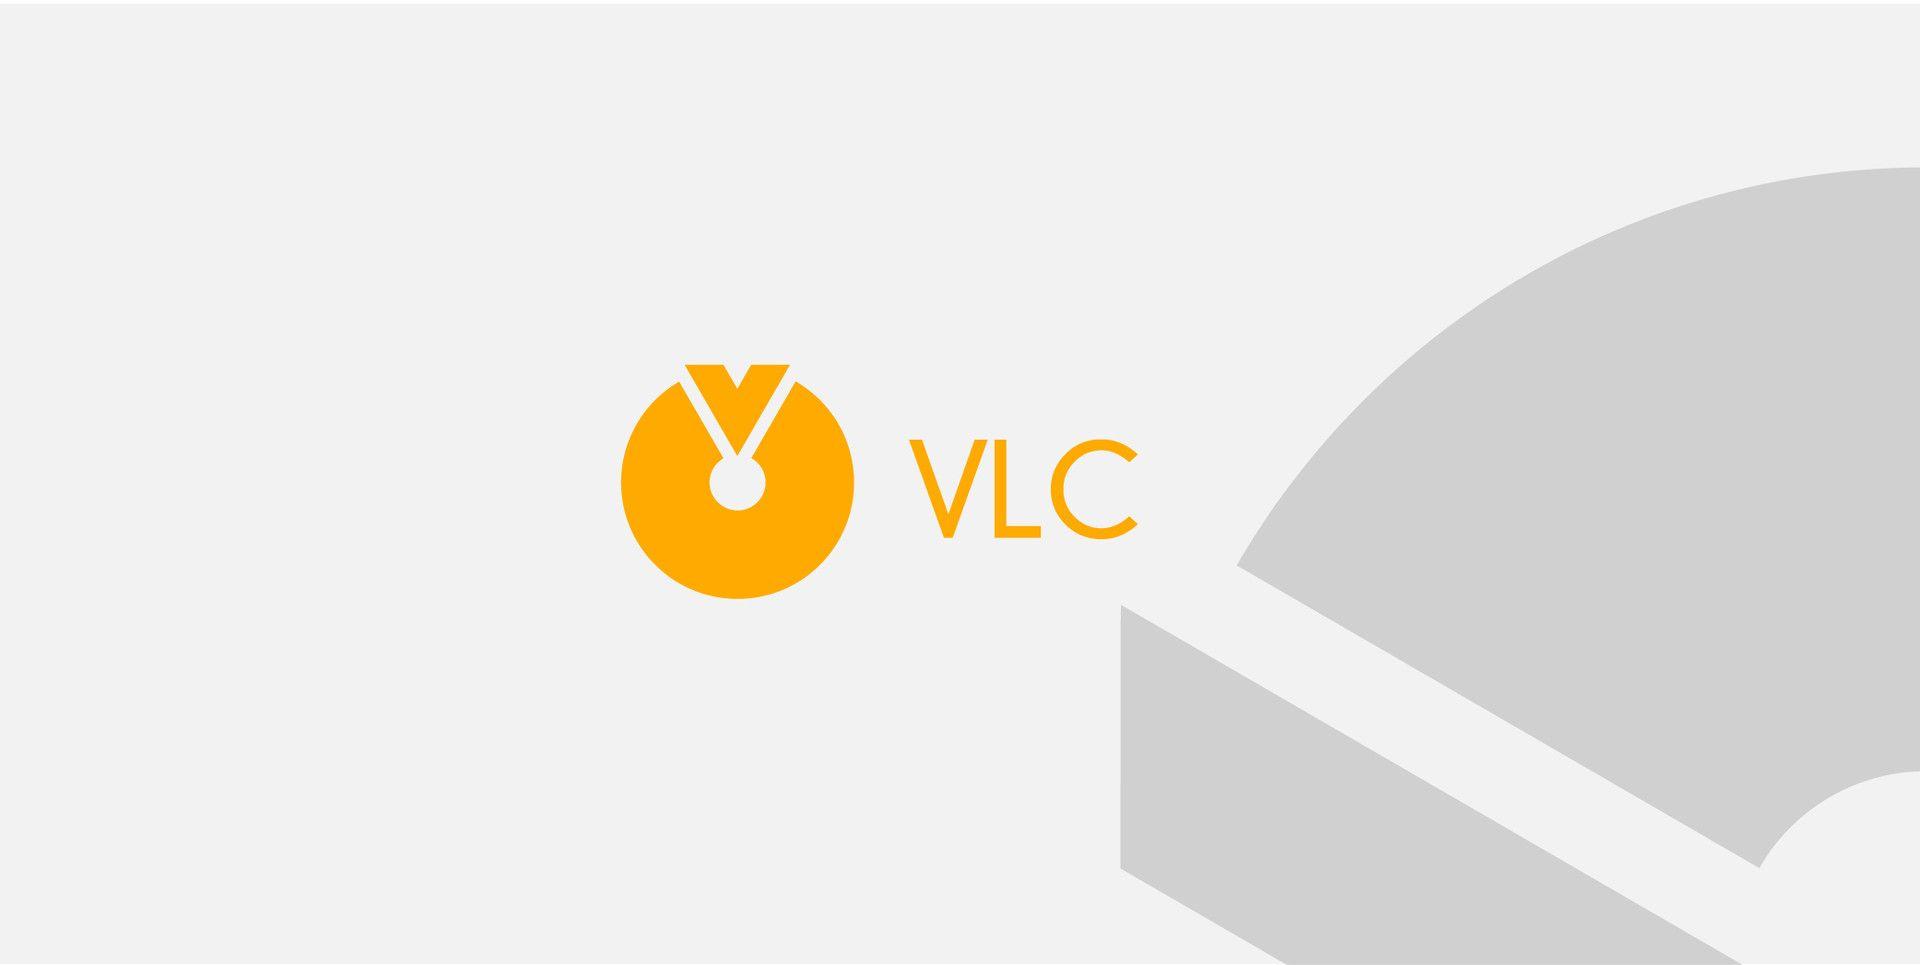 VLC Logo - vlc logo design personal project, Godwin Munam Gem